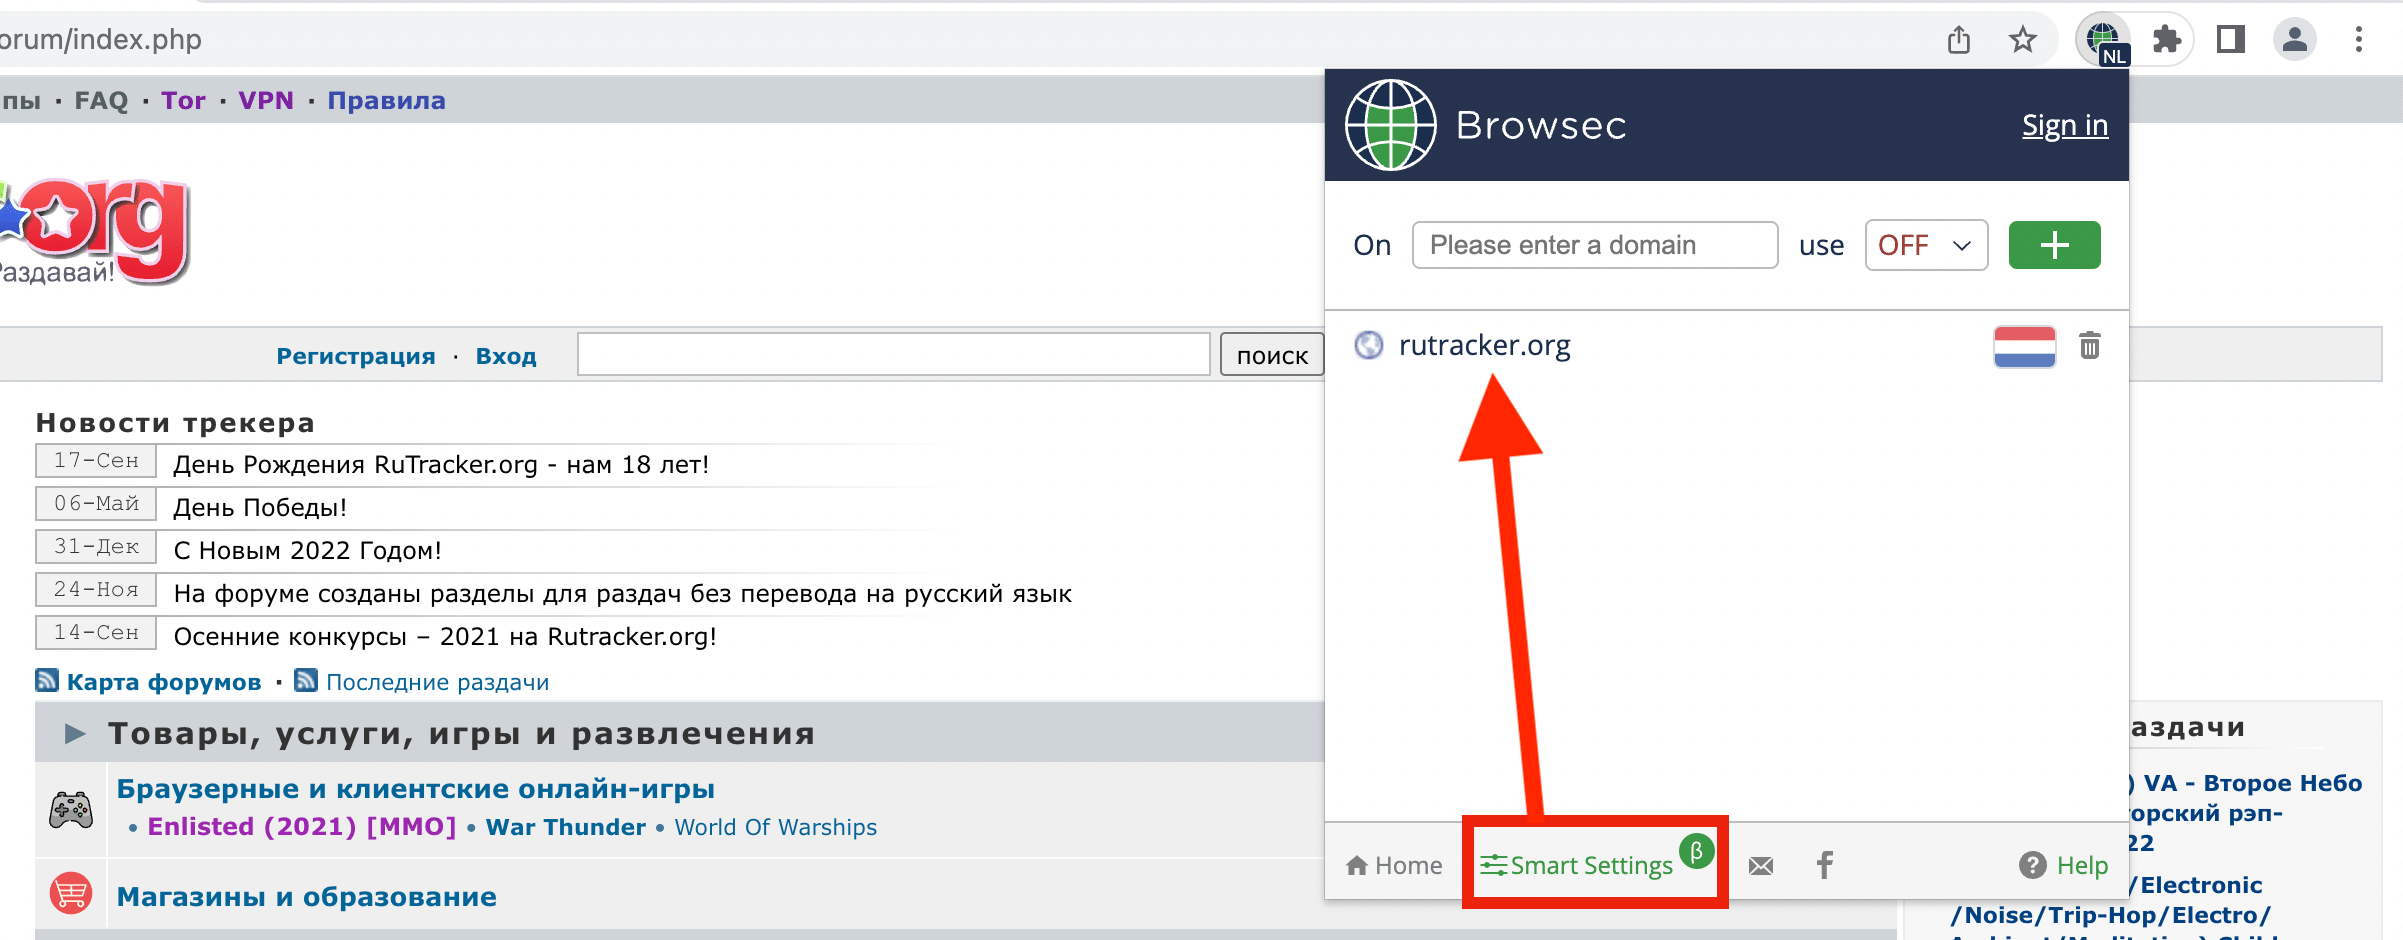 Автоматическая активация VPN для сайта rutracker.org в настройках Smart Settings Browsec VPN